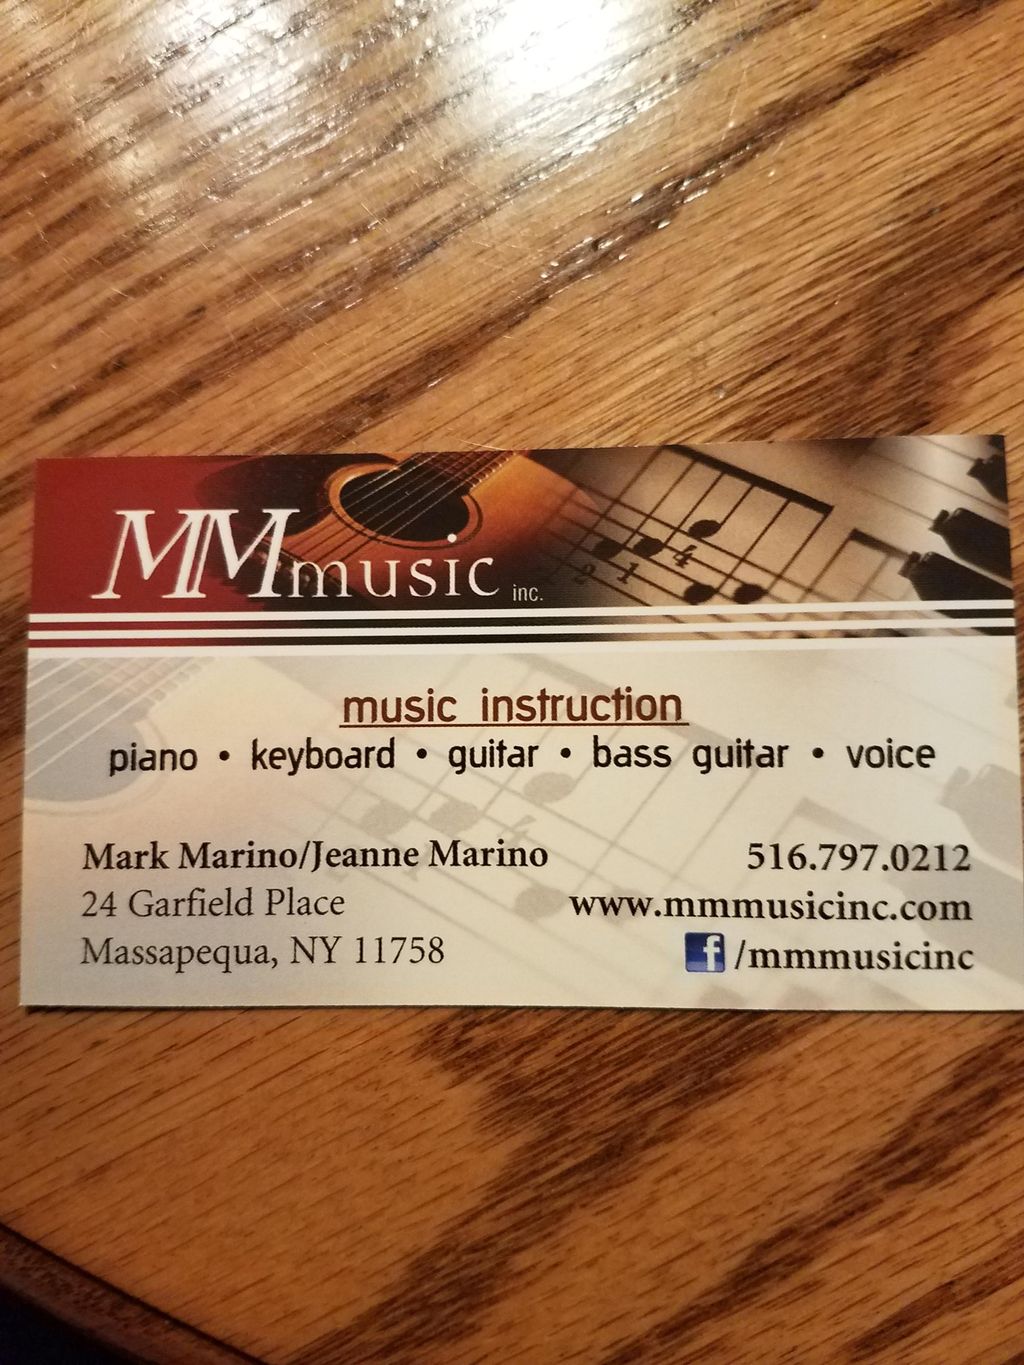 MM Music inc.